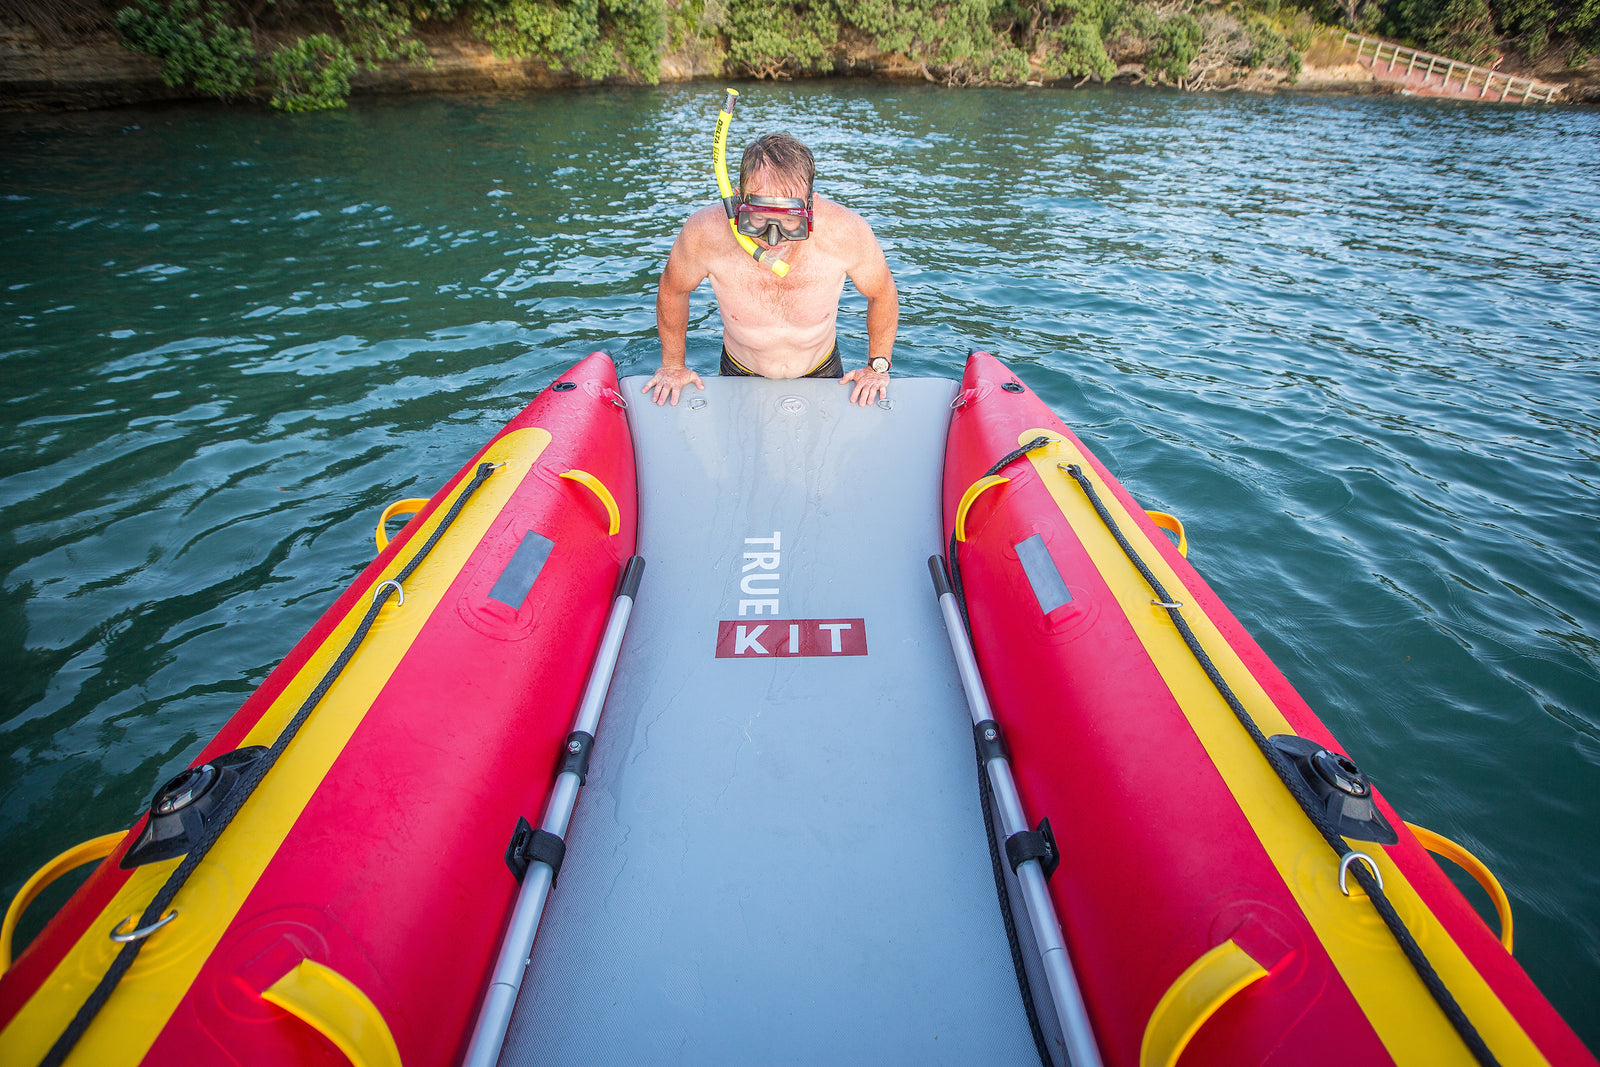 True Kit lightweight, stable, portable inflatable catamarans